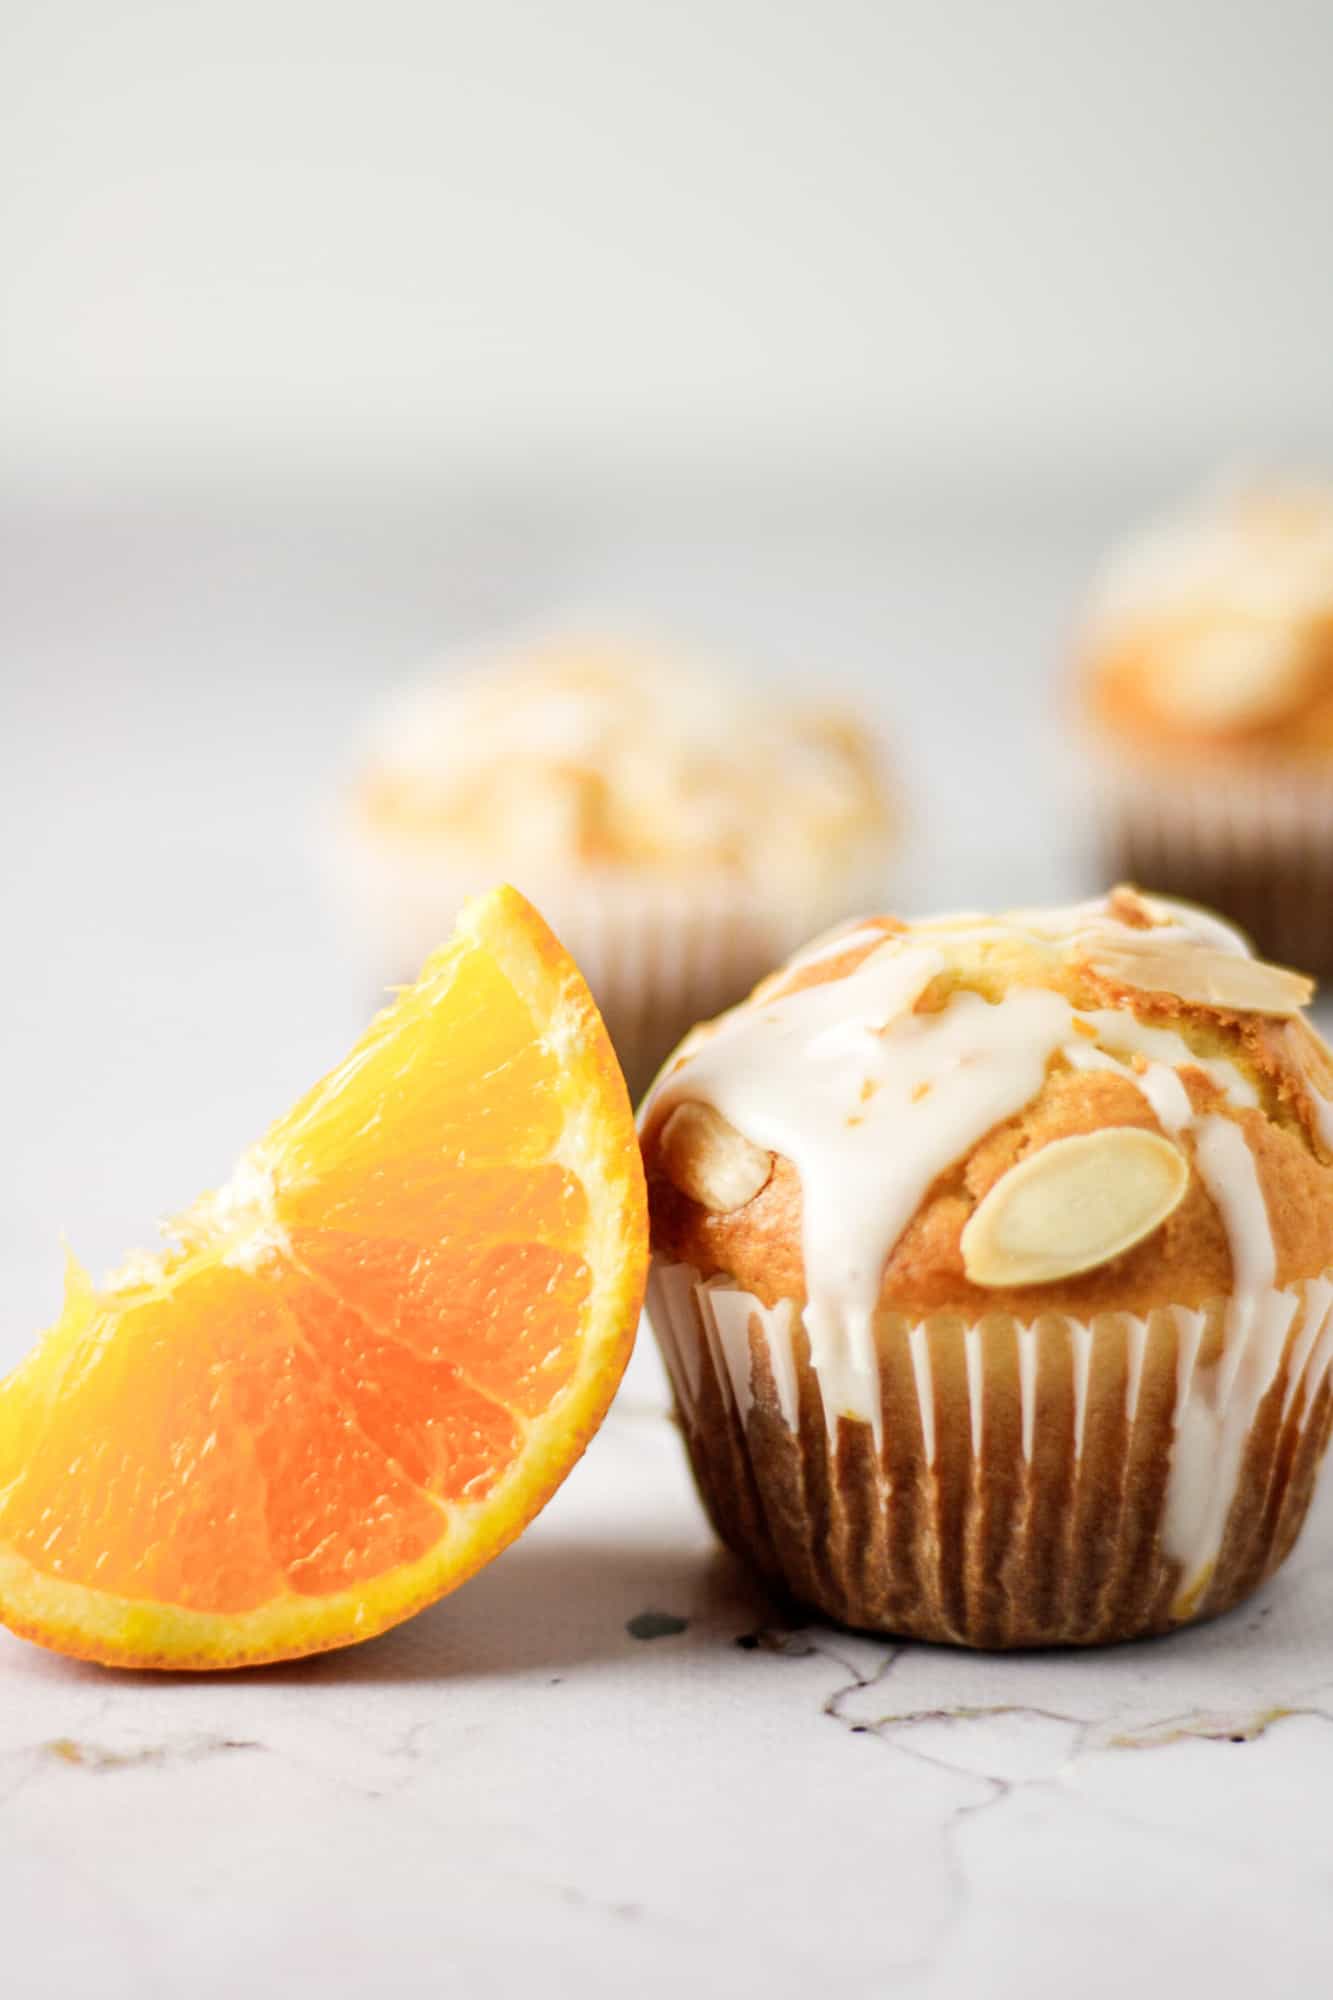 An orange slice leaning on a single orange almond muffin with orange glaze